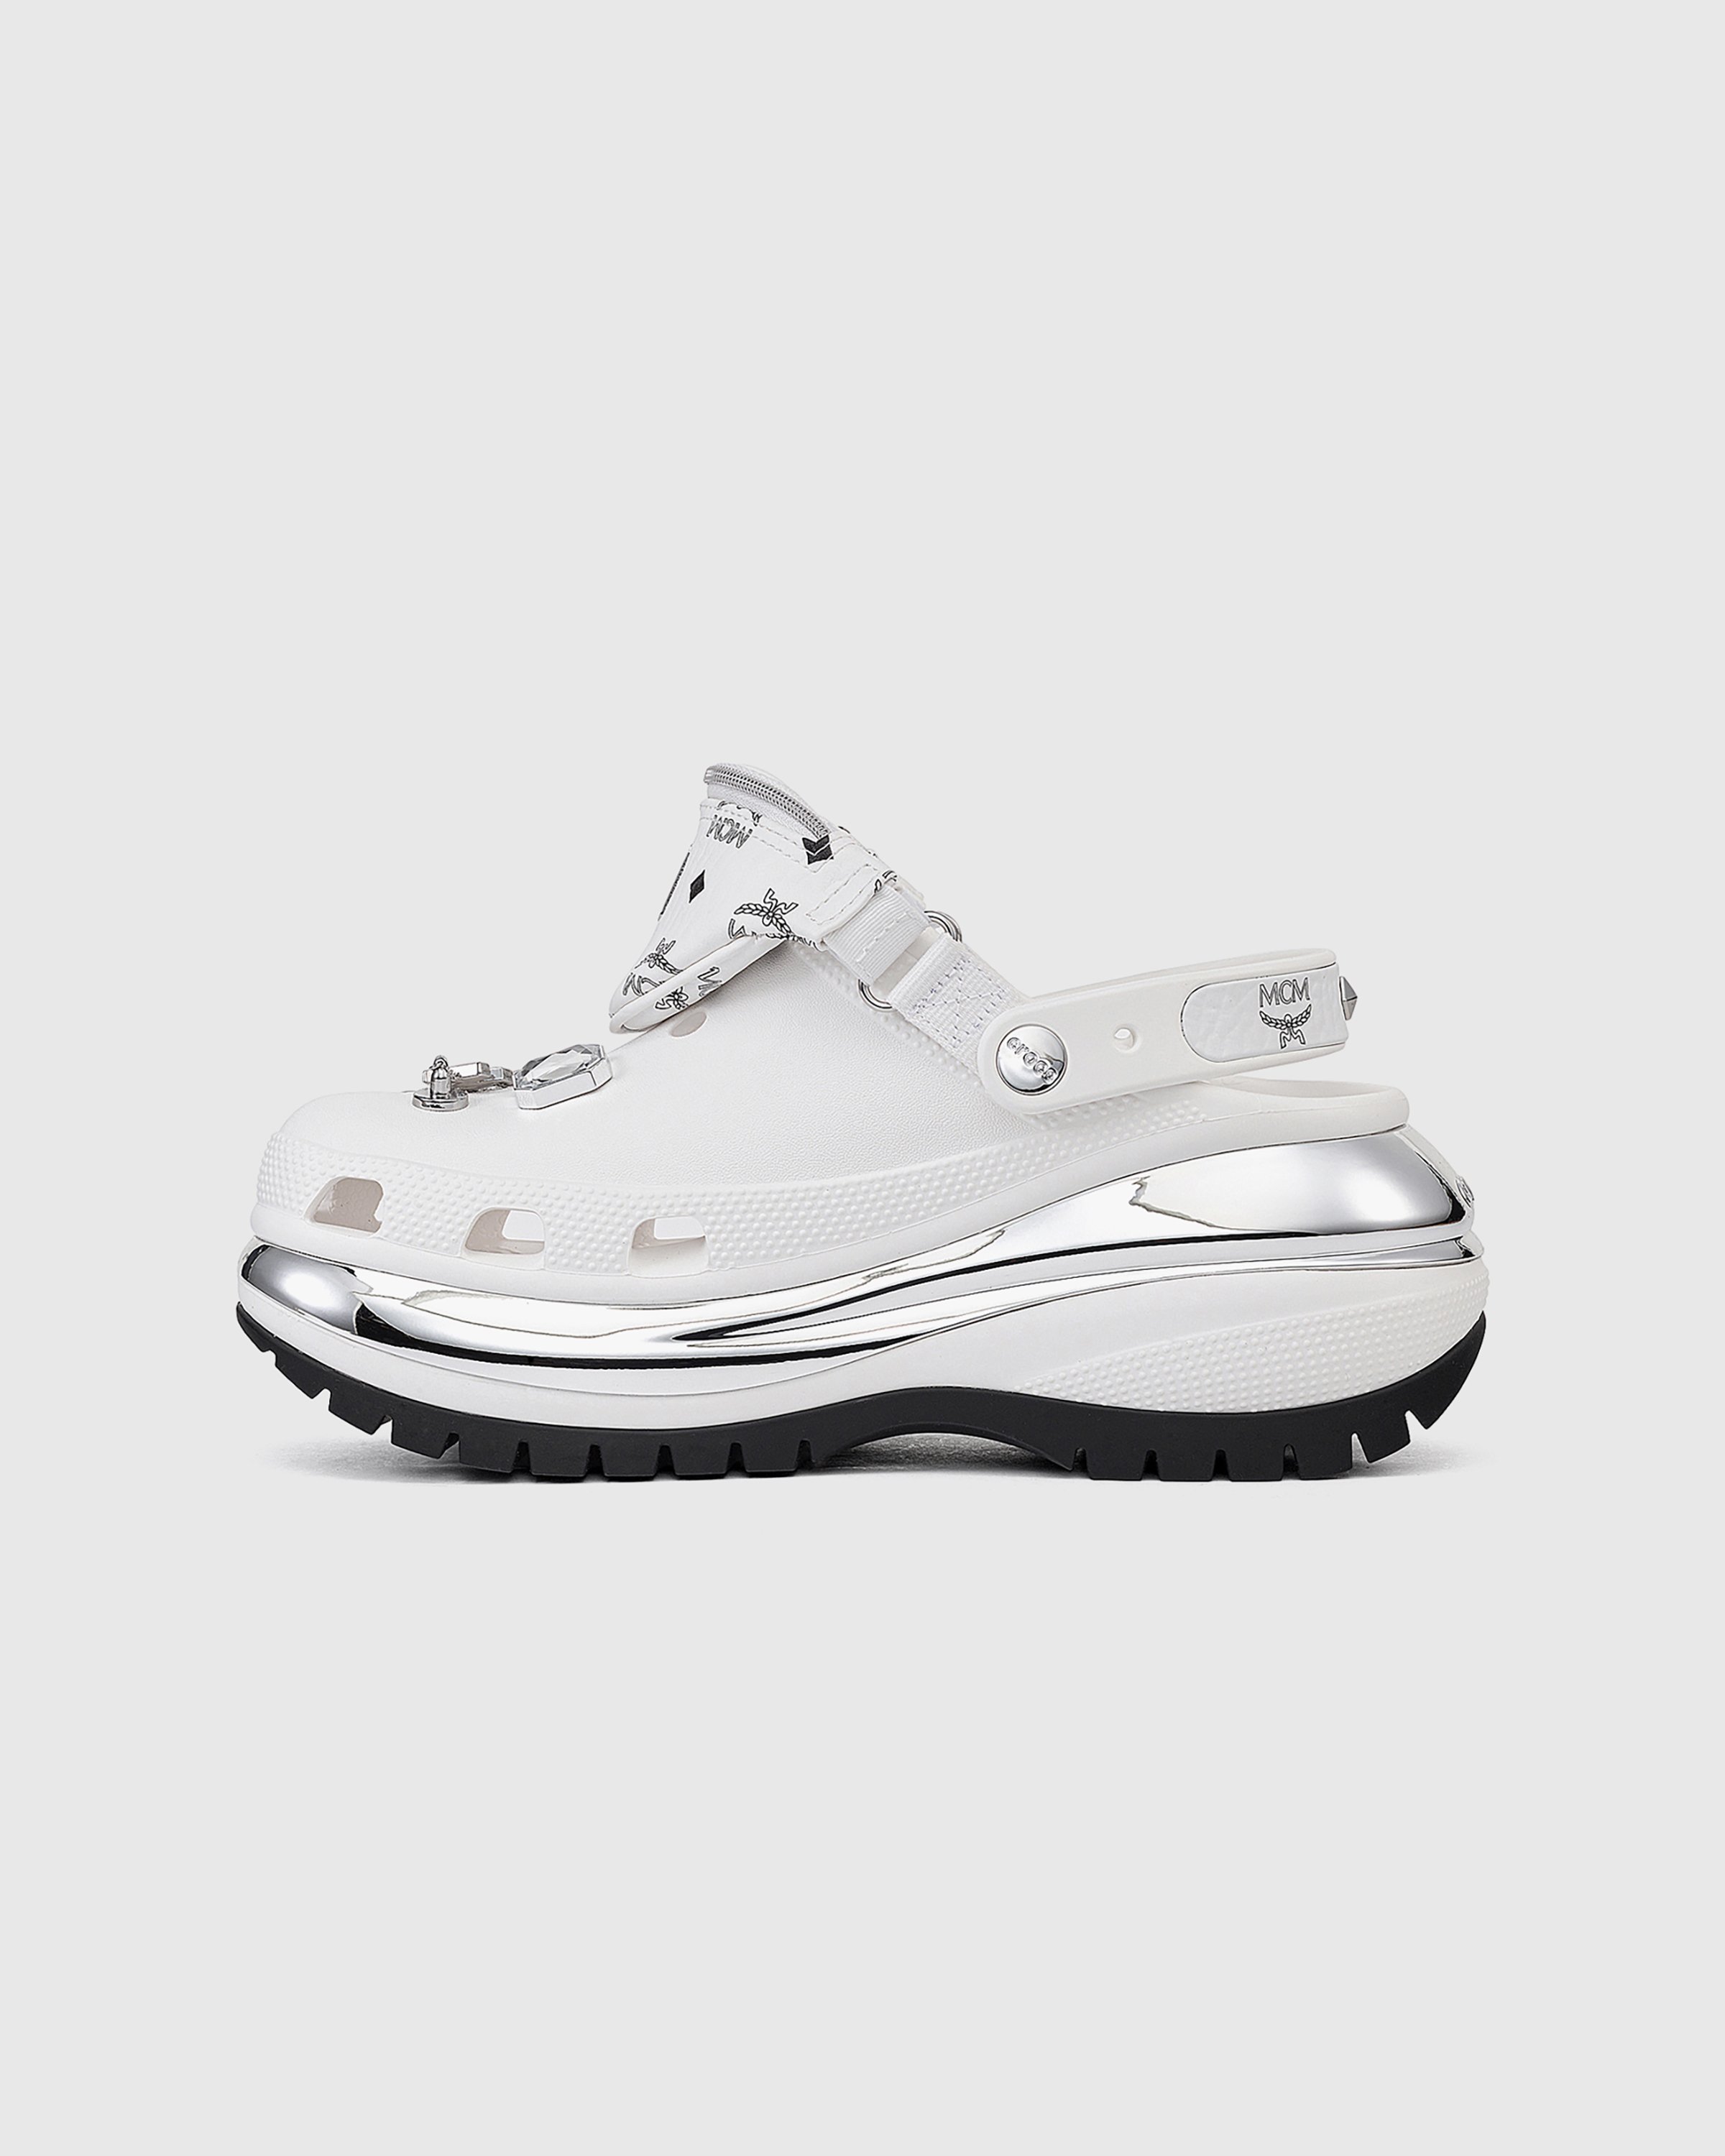 MCM x Crocs - MEGA CRUSH BB 365 White - Footwear - White - Image 2